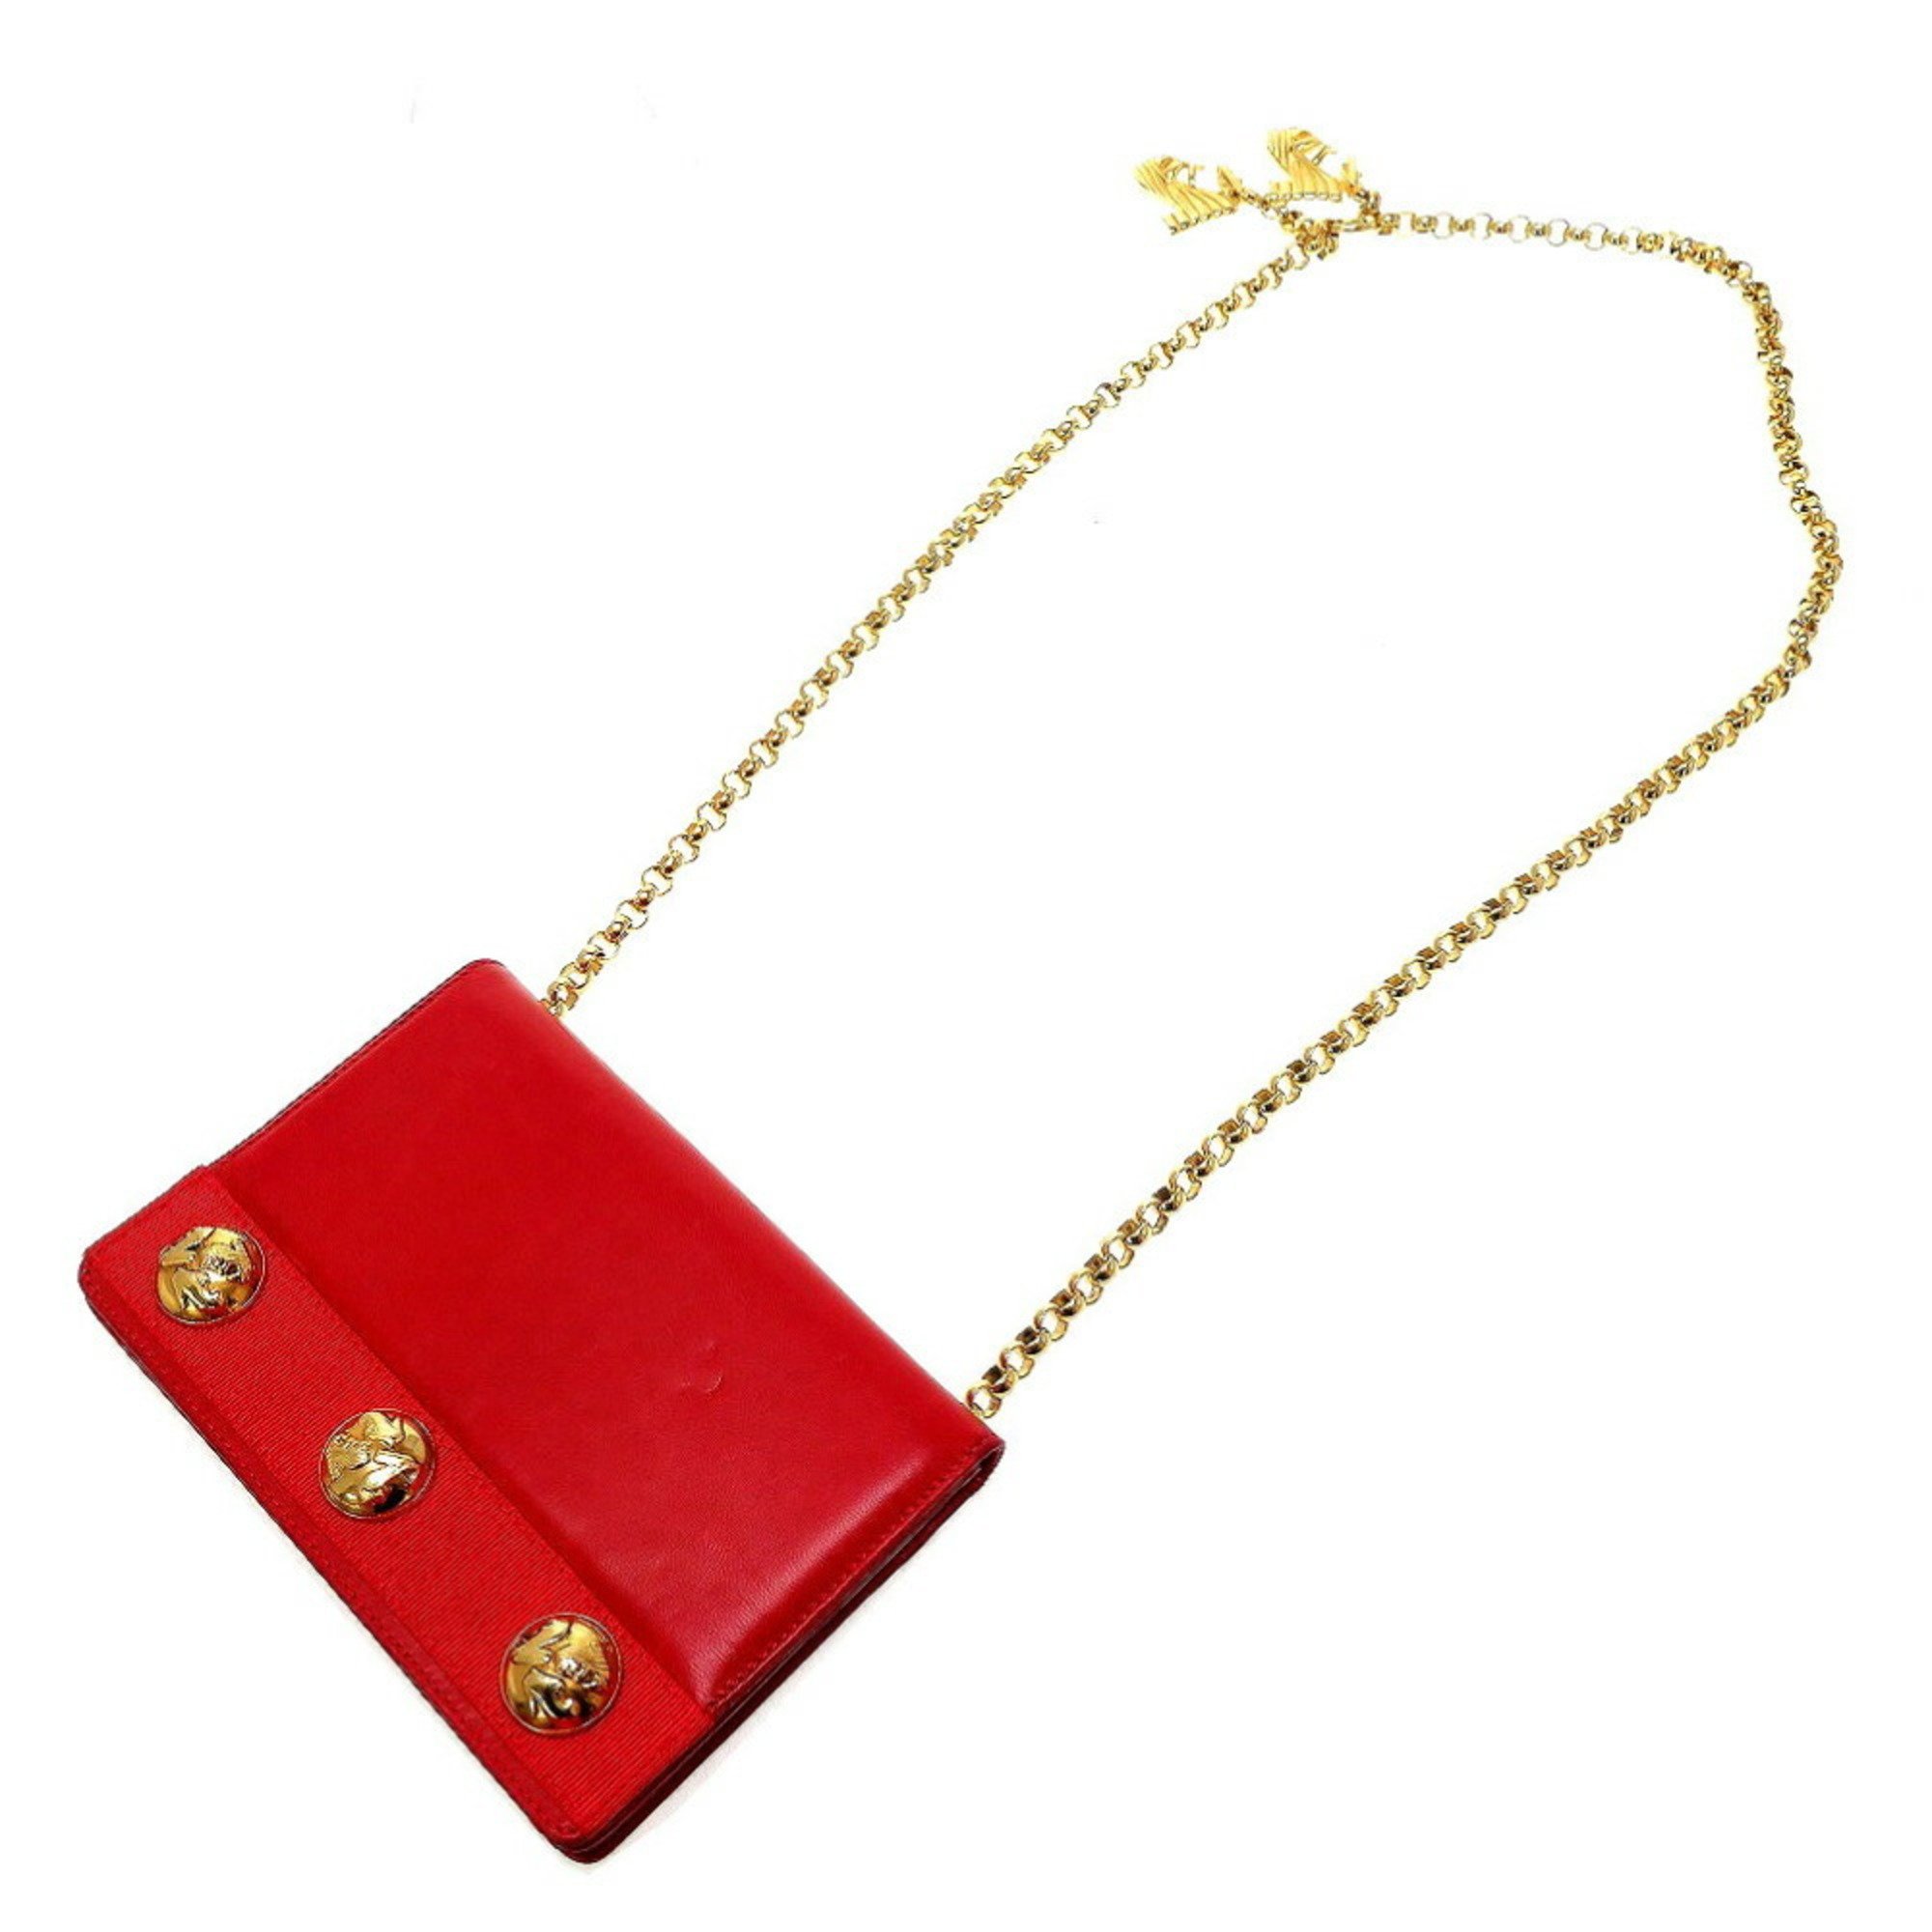 Salvatore Ferragamo Chain Leather Gold Shoulder Bag